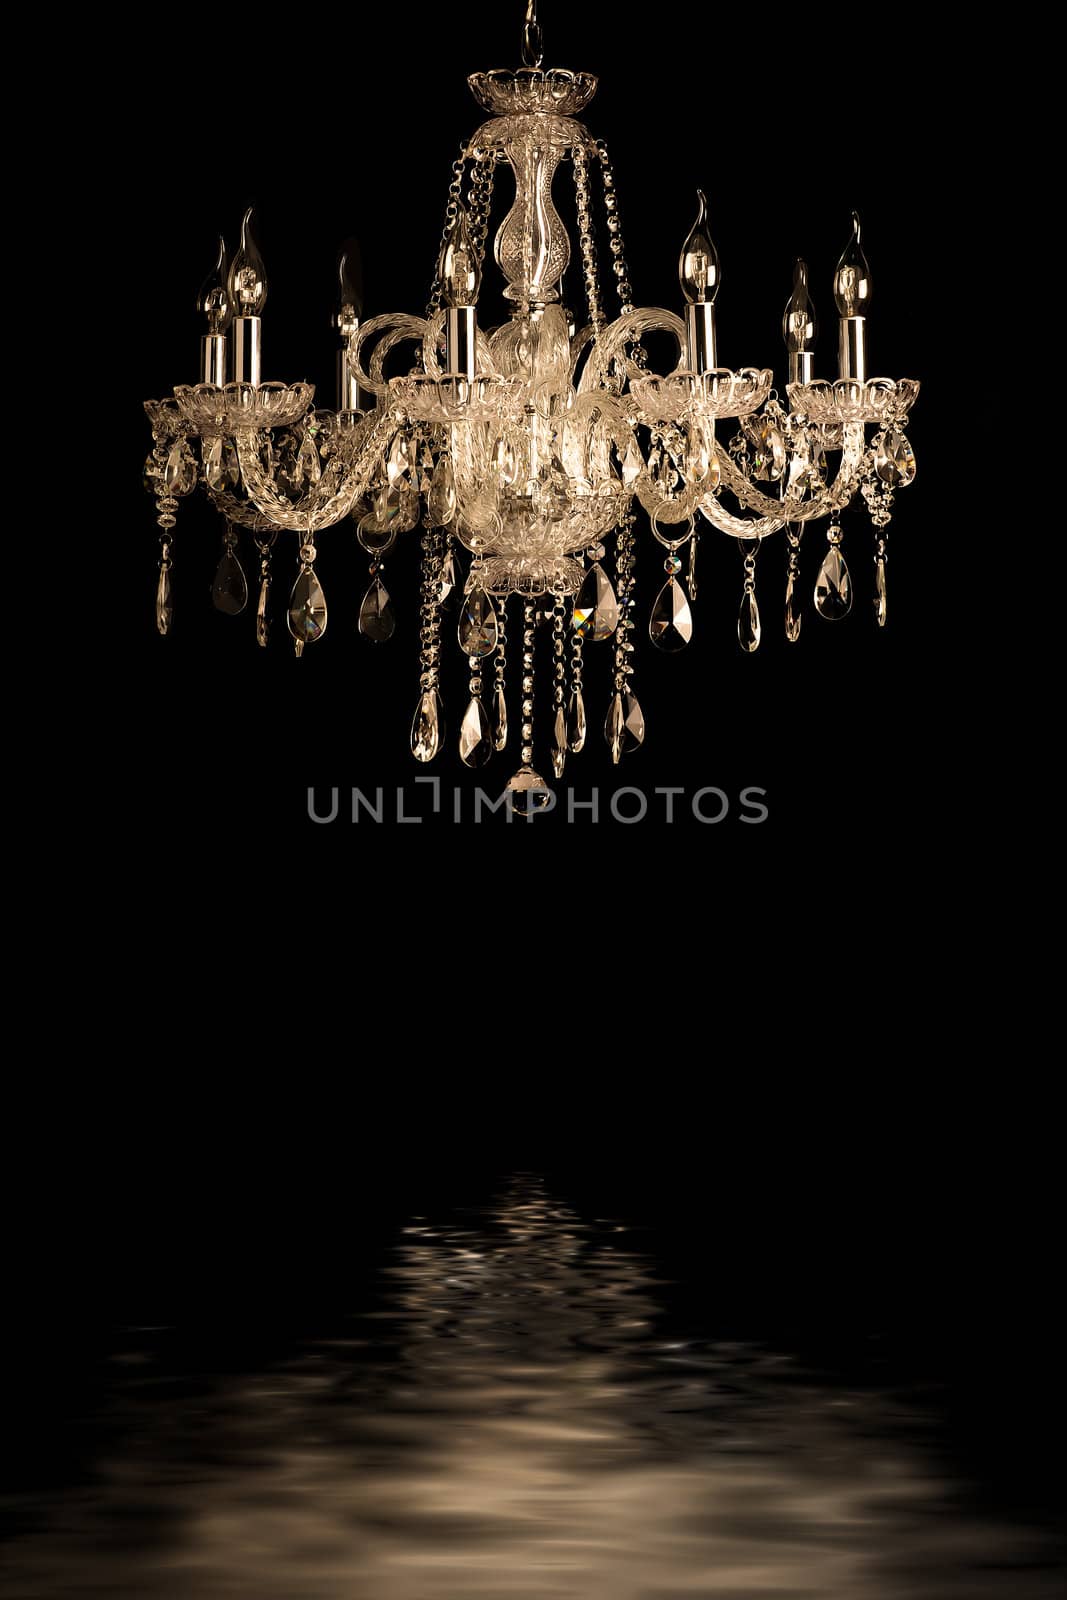 vintage glass lamp black background by Carche